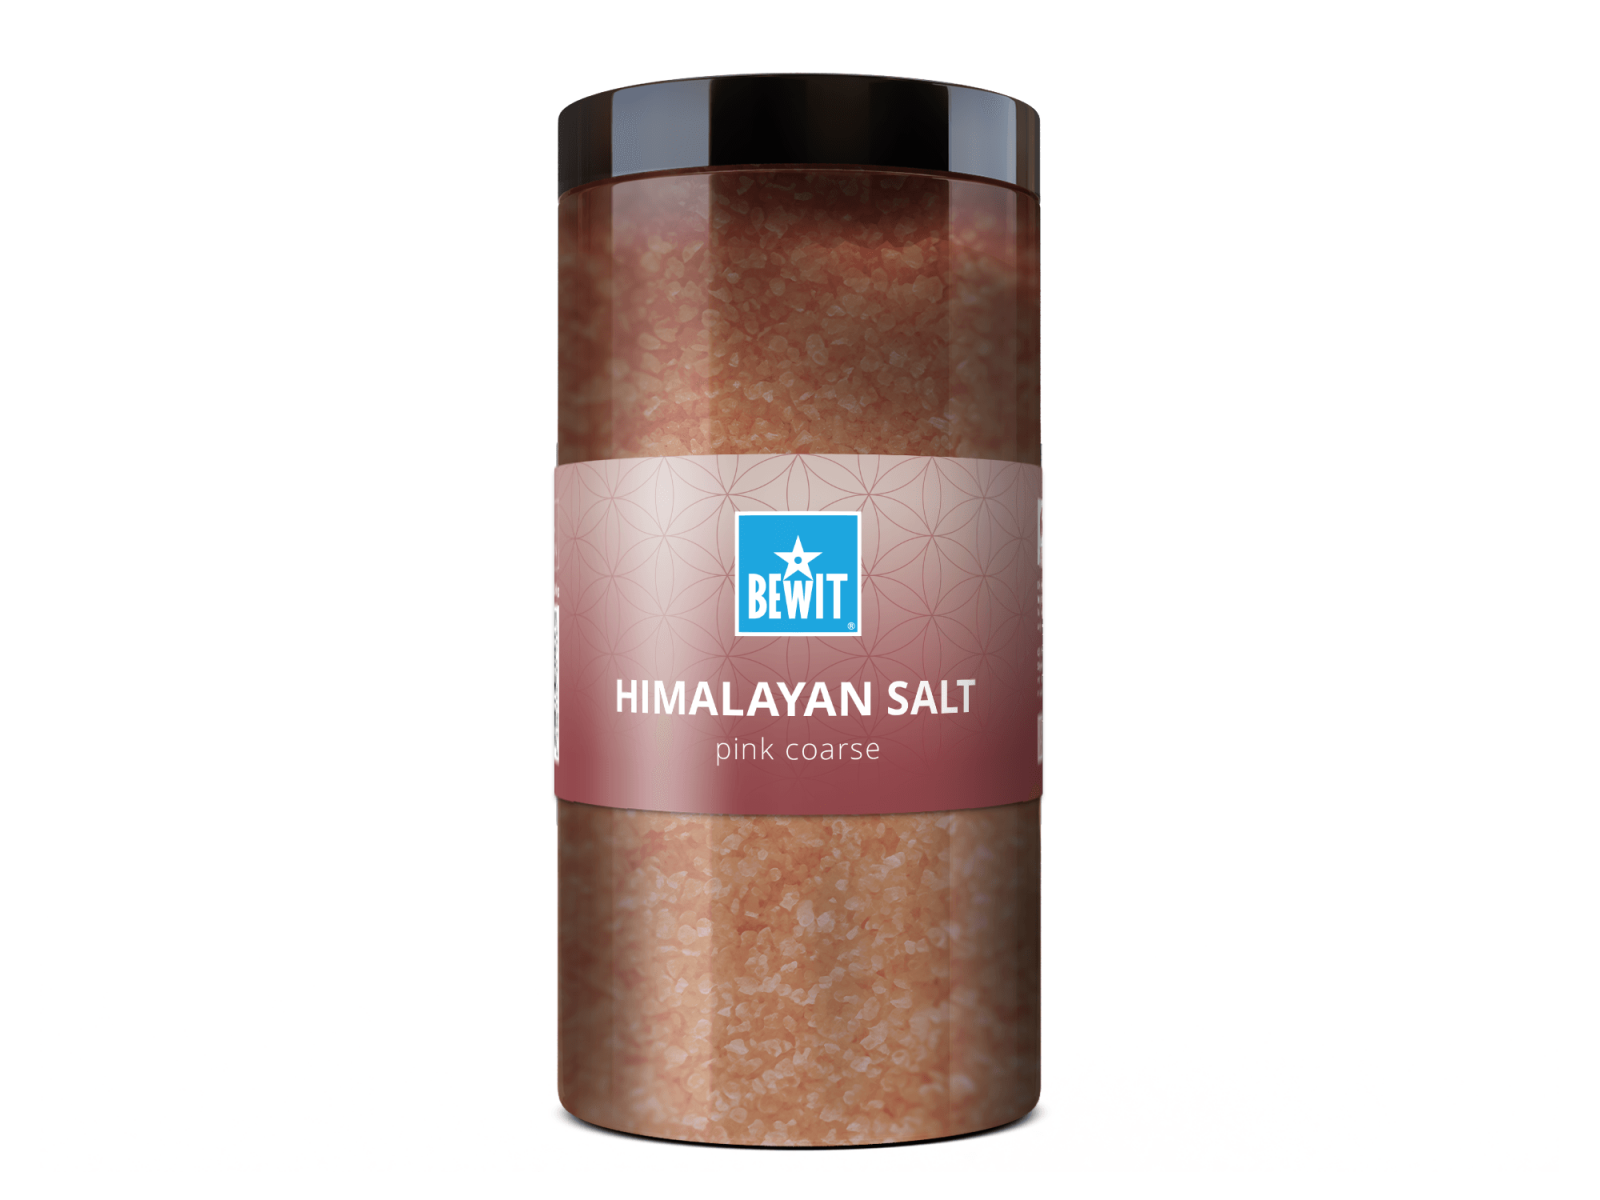 BEWIT Himalayan salt pink, coarse grain - A superfood - 3